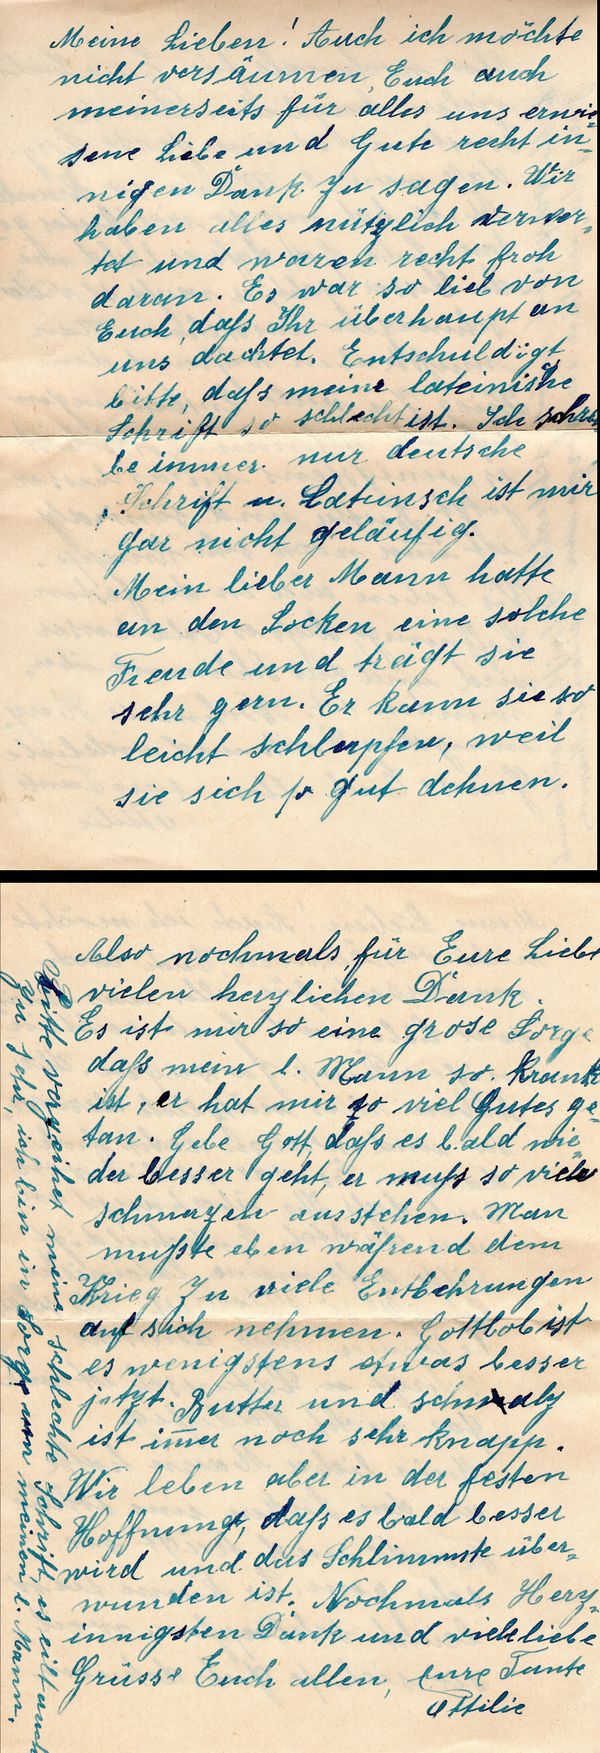 1949 - 05 08 letter to Eugene Hinderer from Haller Tante Ottillie.jpg